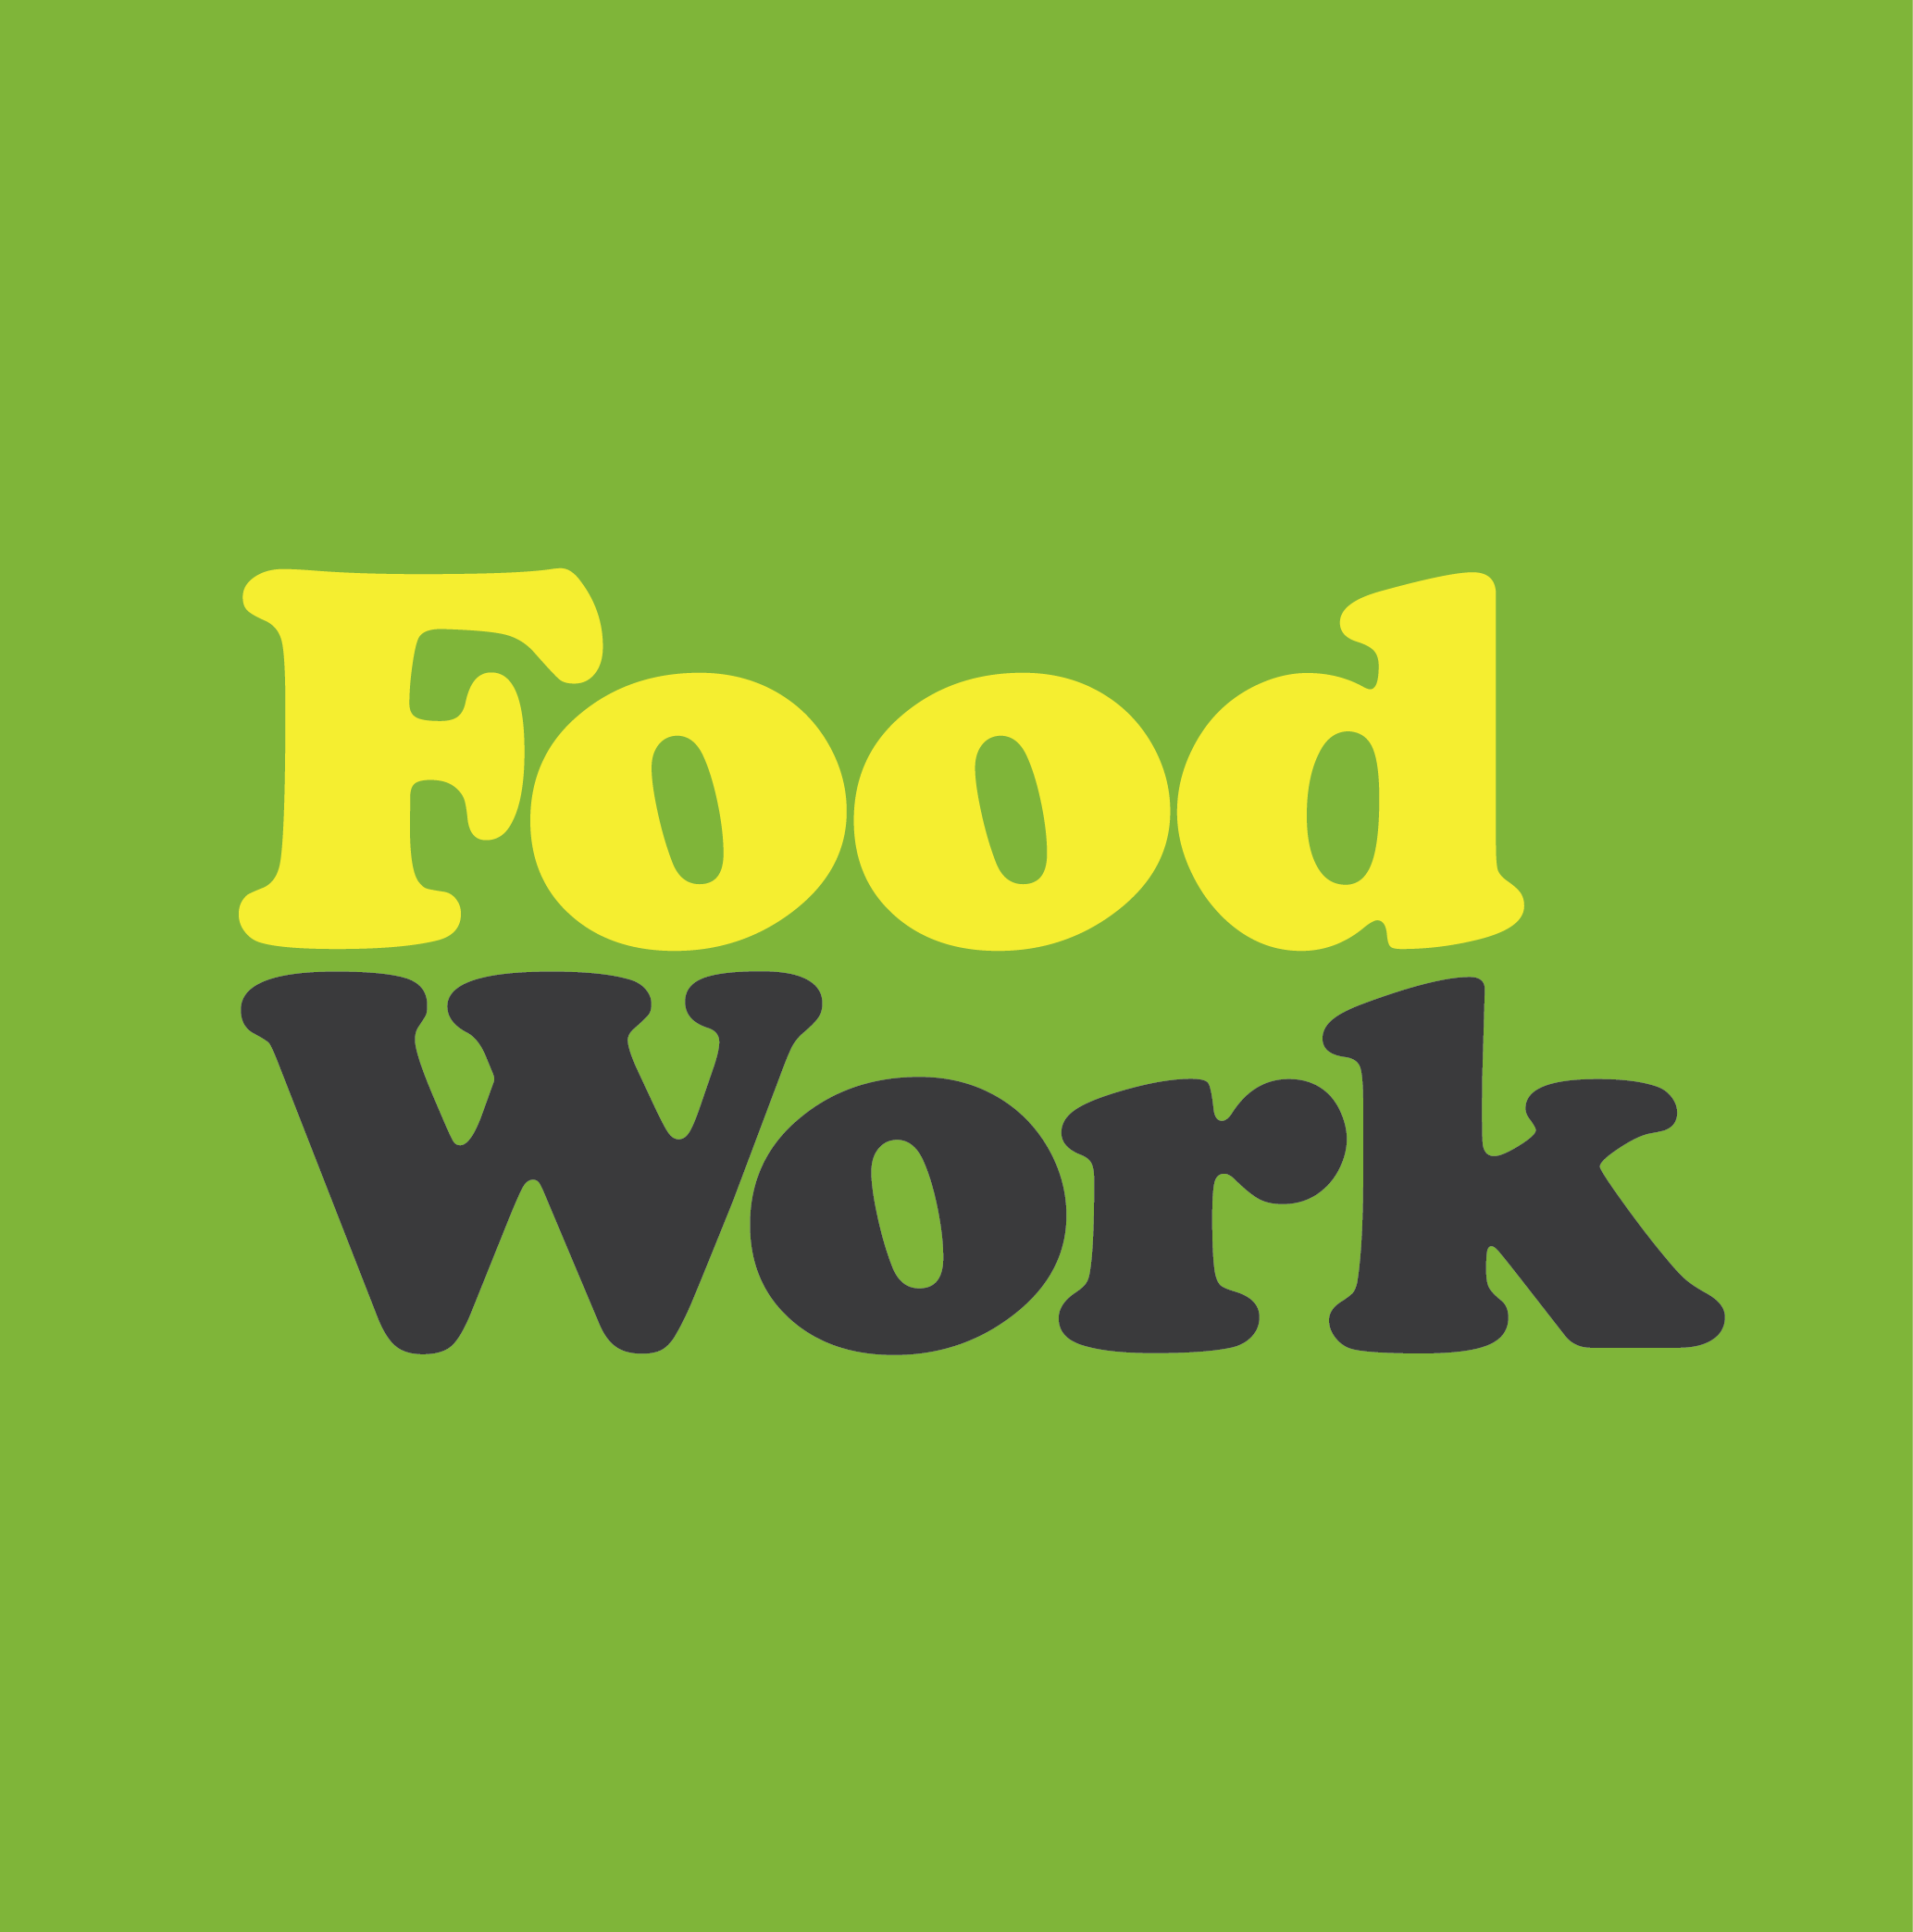 Jobs in local food, regenerative agriculture: FoodWork.ca